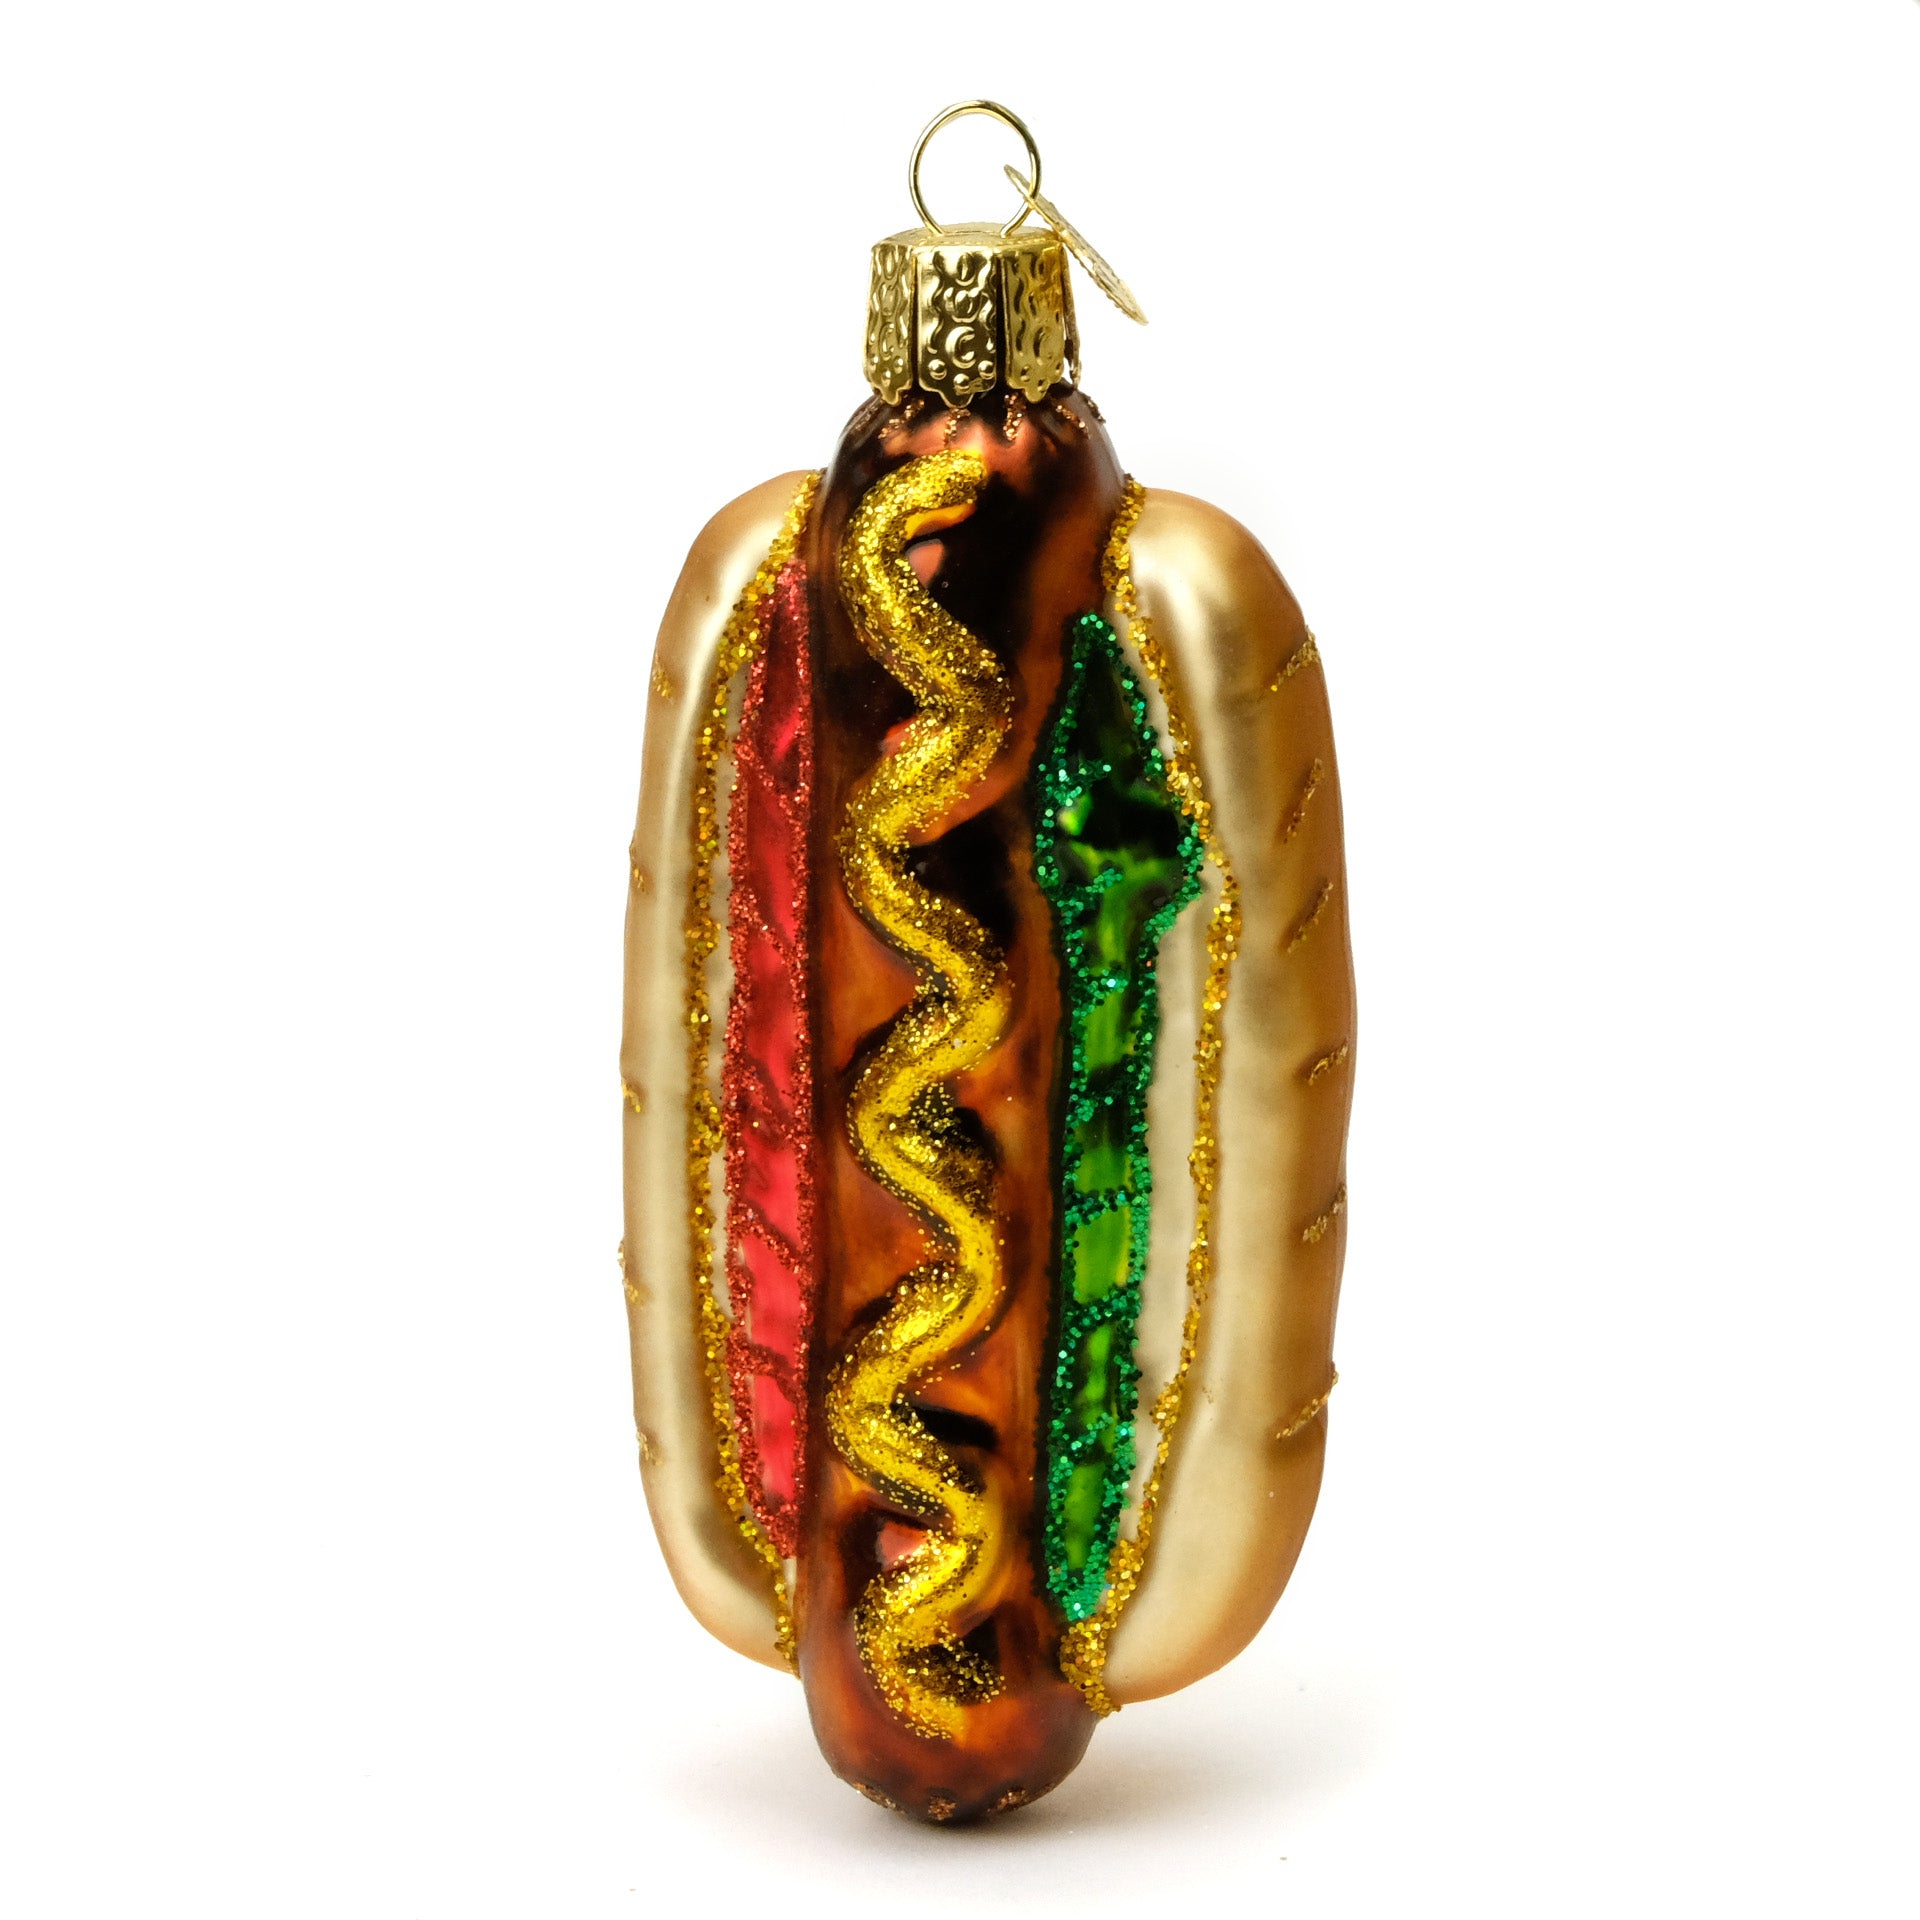  Dachshund Hot dog keychain Handmade charm food